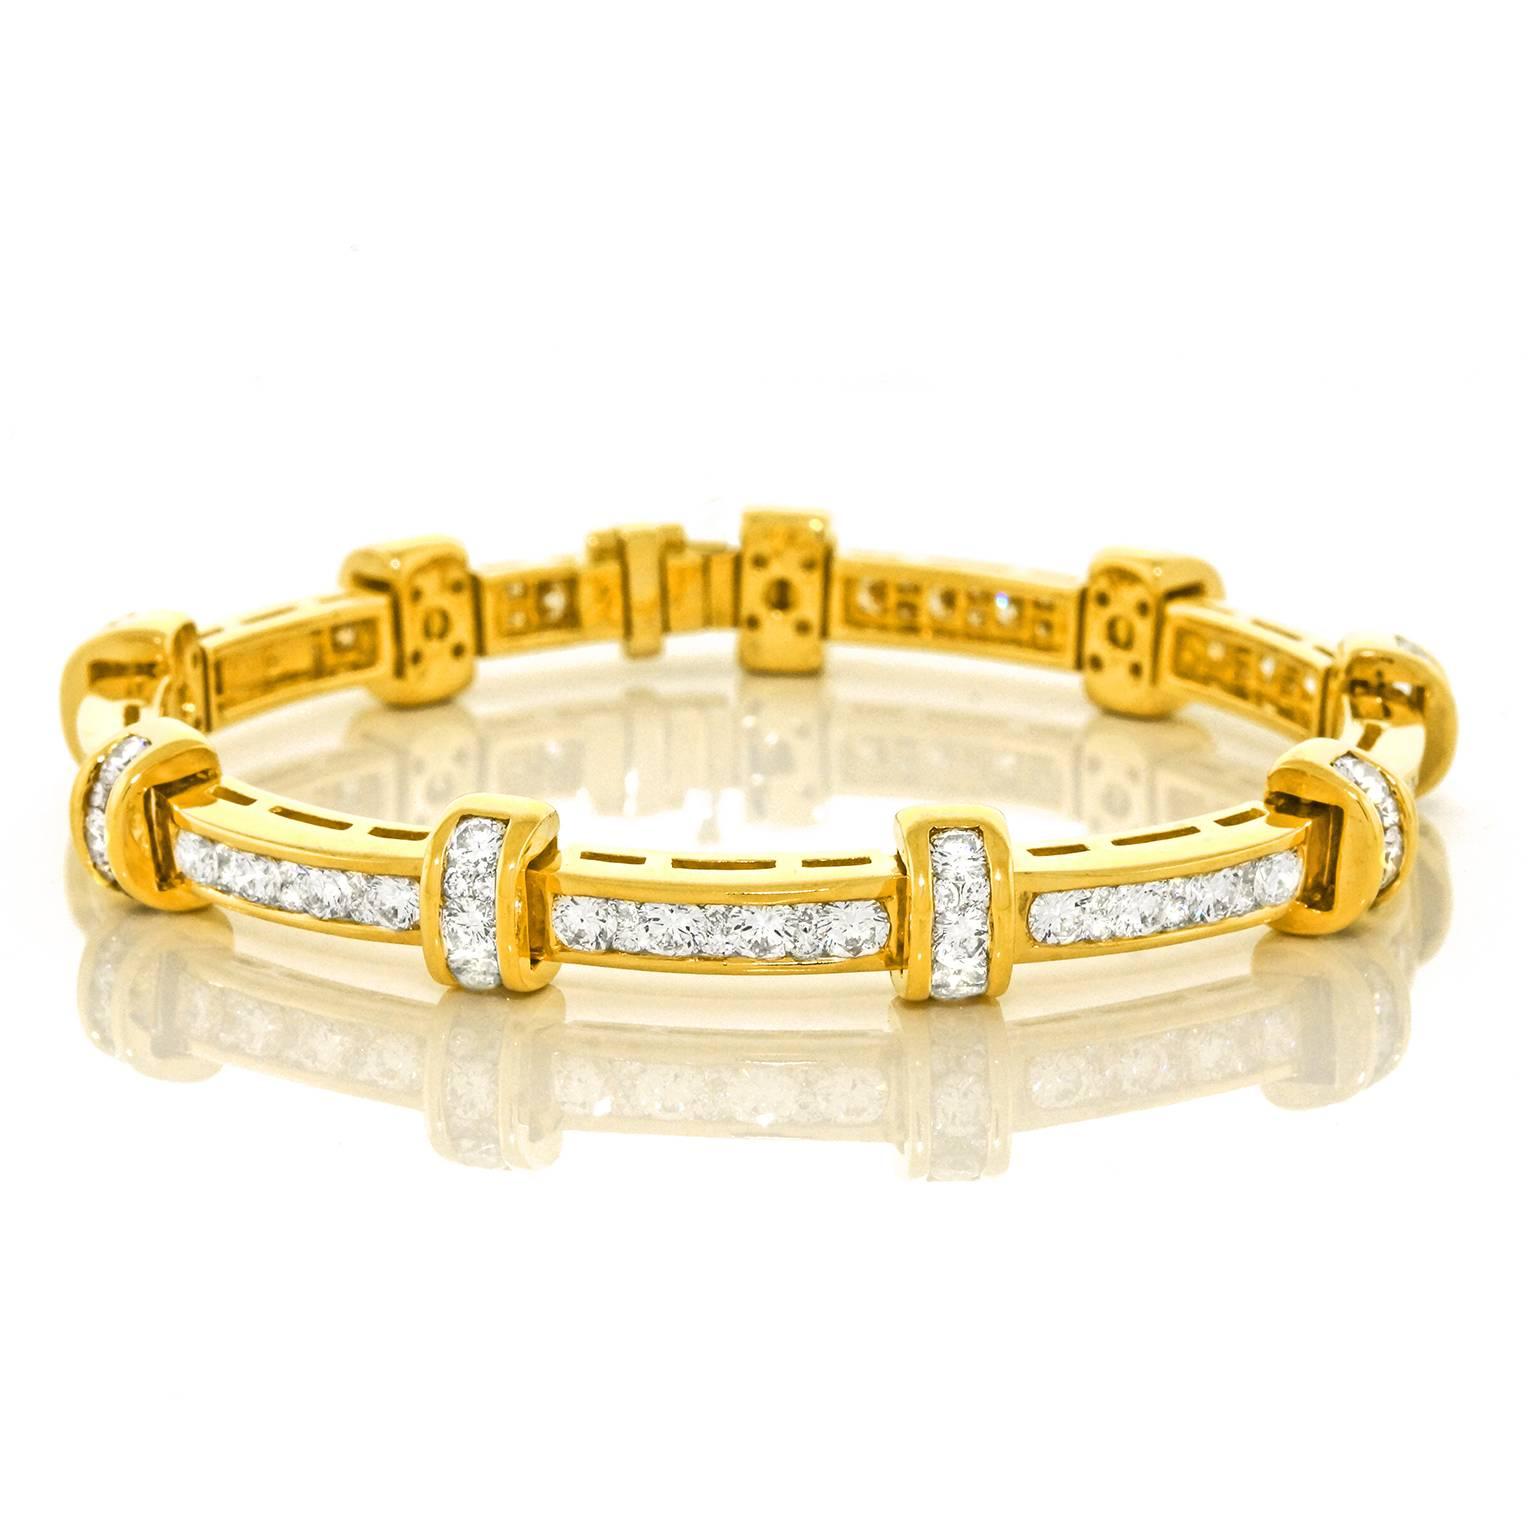 Fabulous 8.82 Carats Total Weight Diamond and Gold Bracelet 5